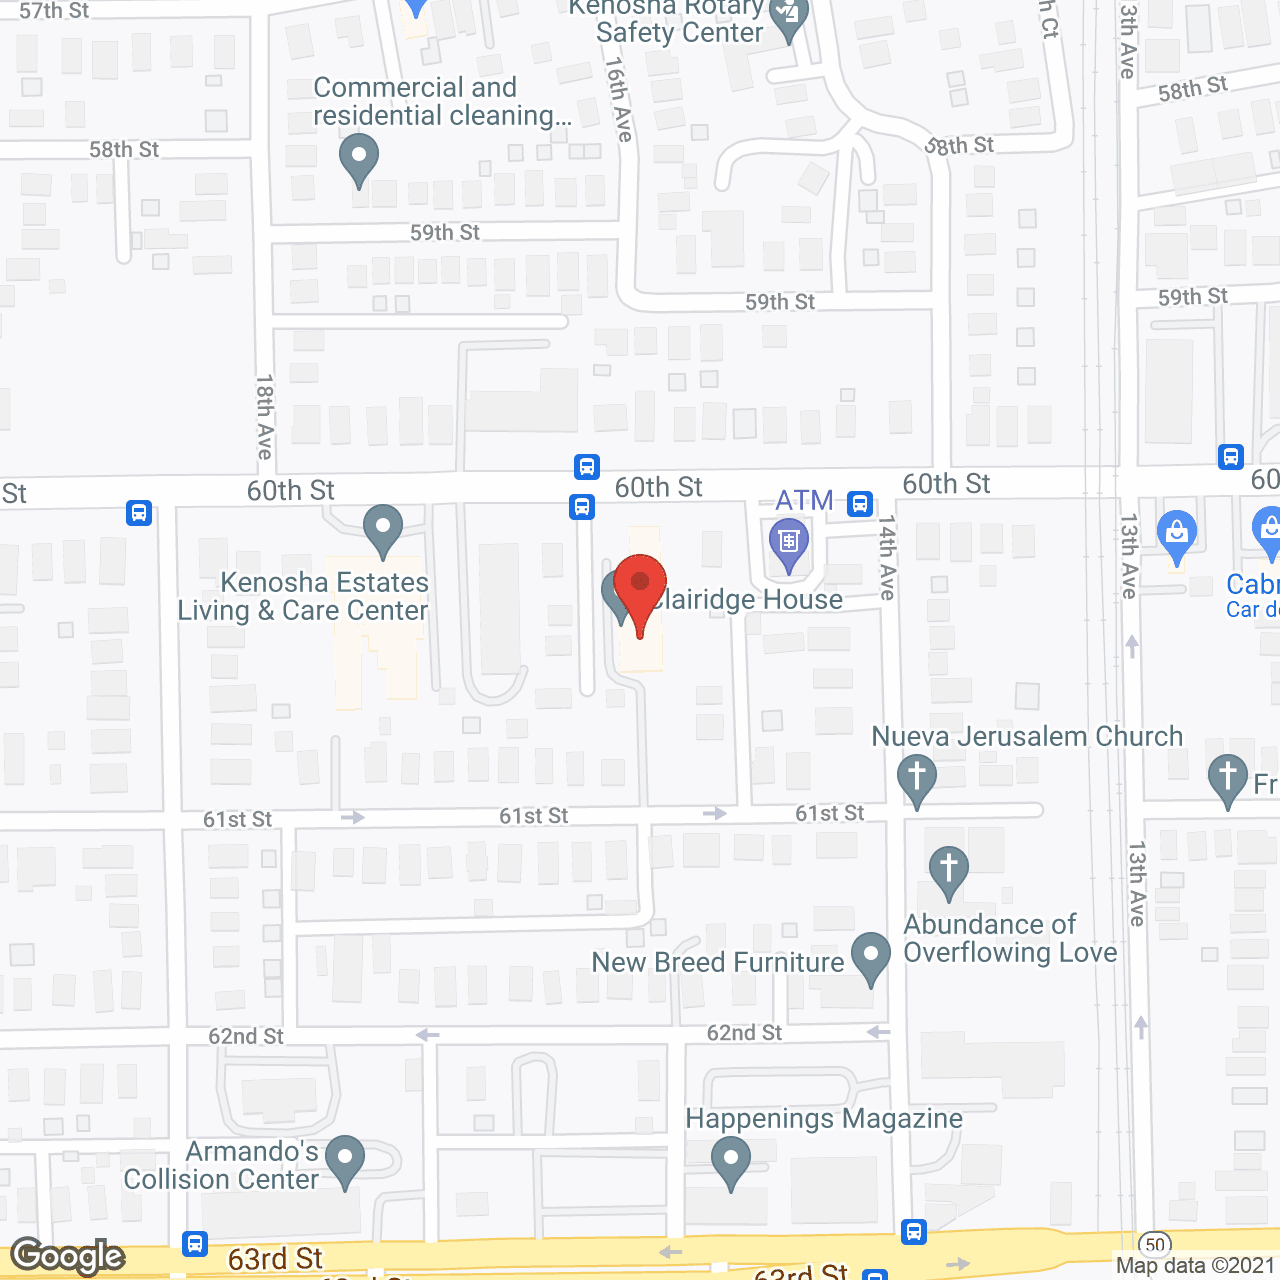 Clairidge House in google map